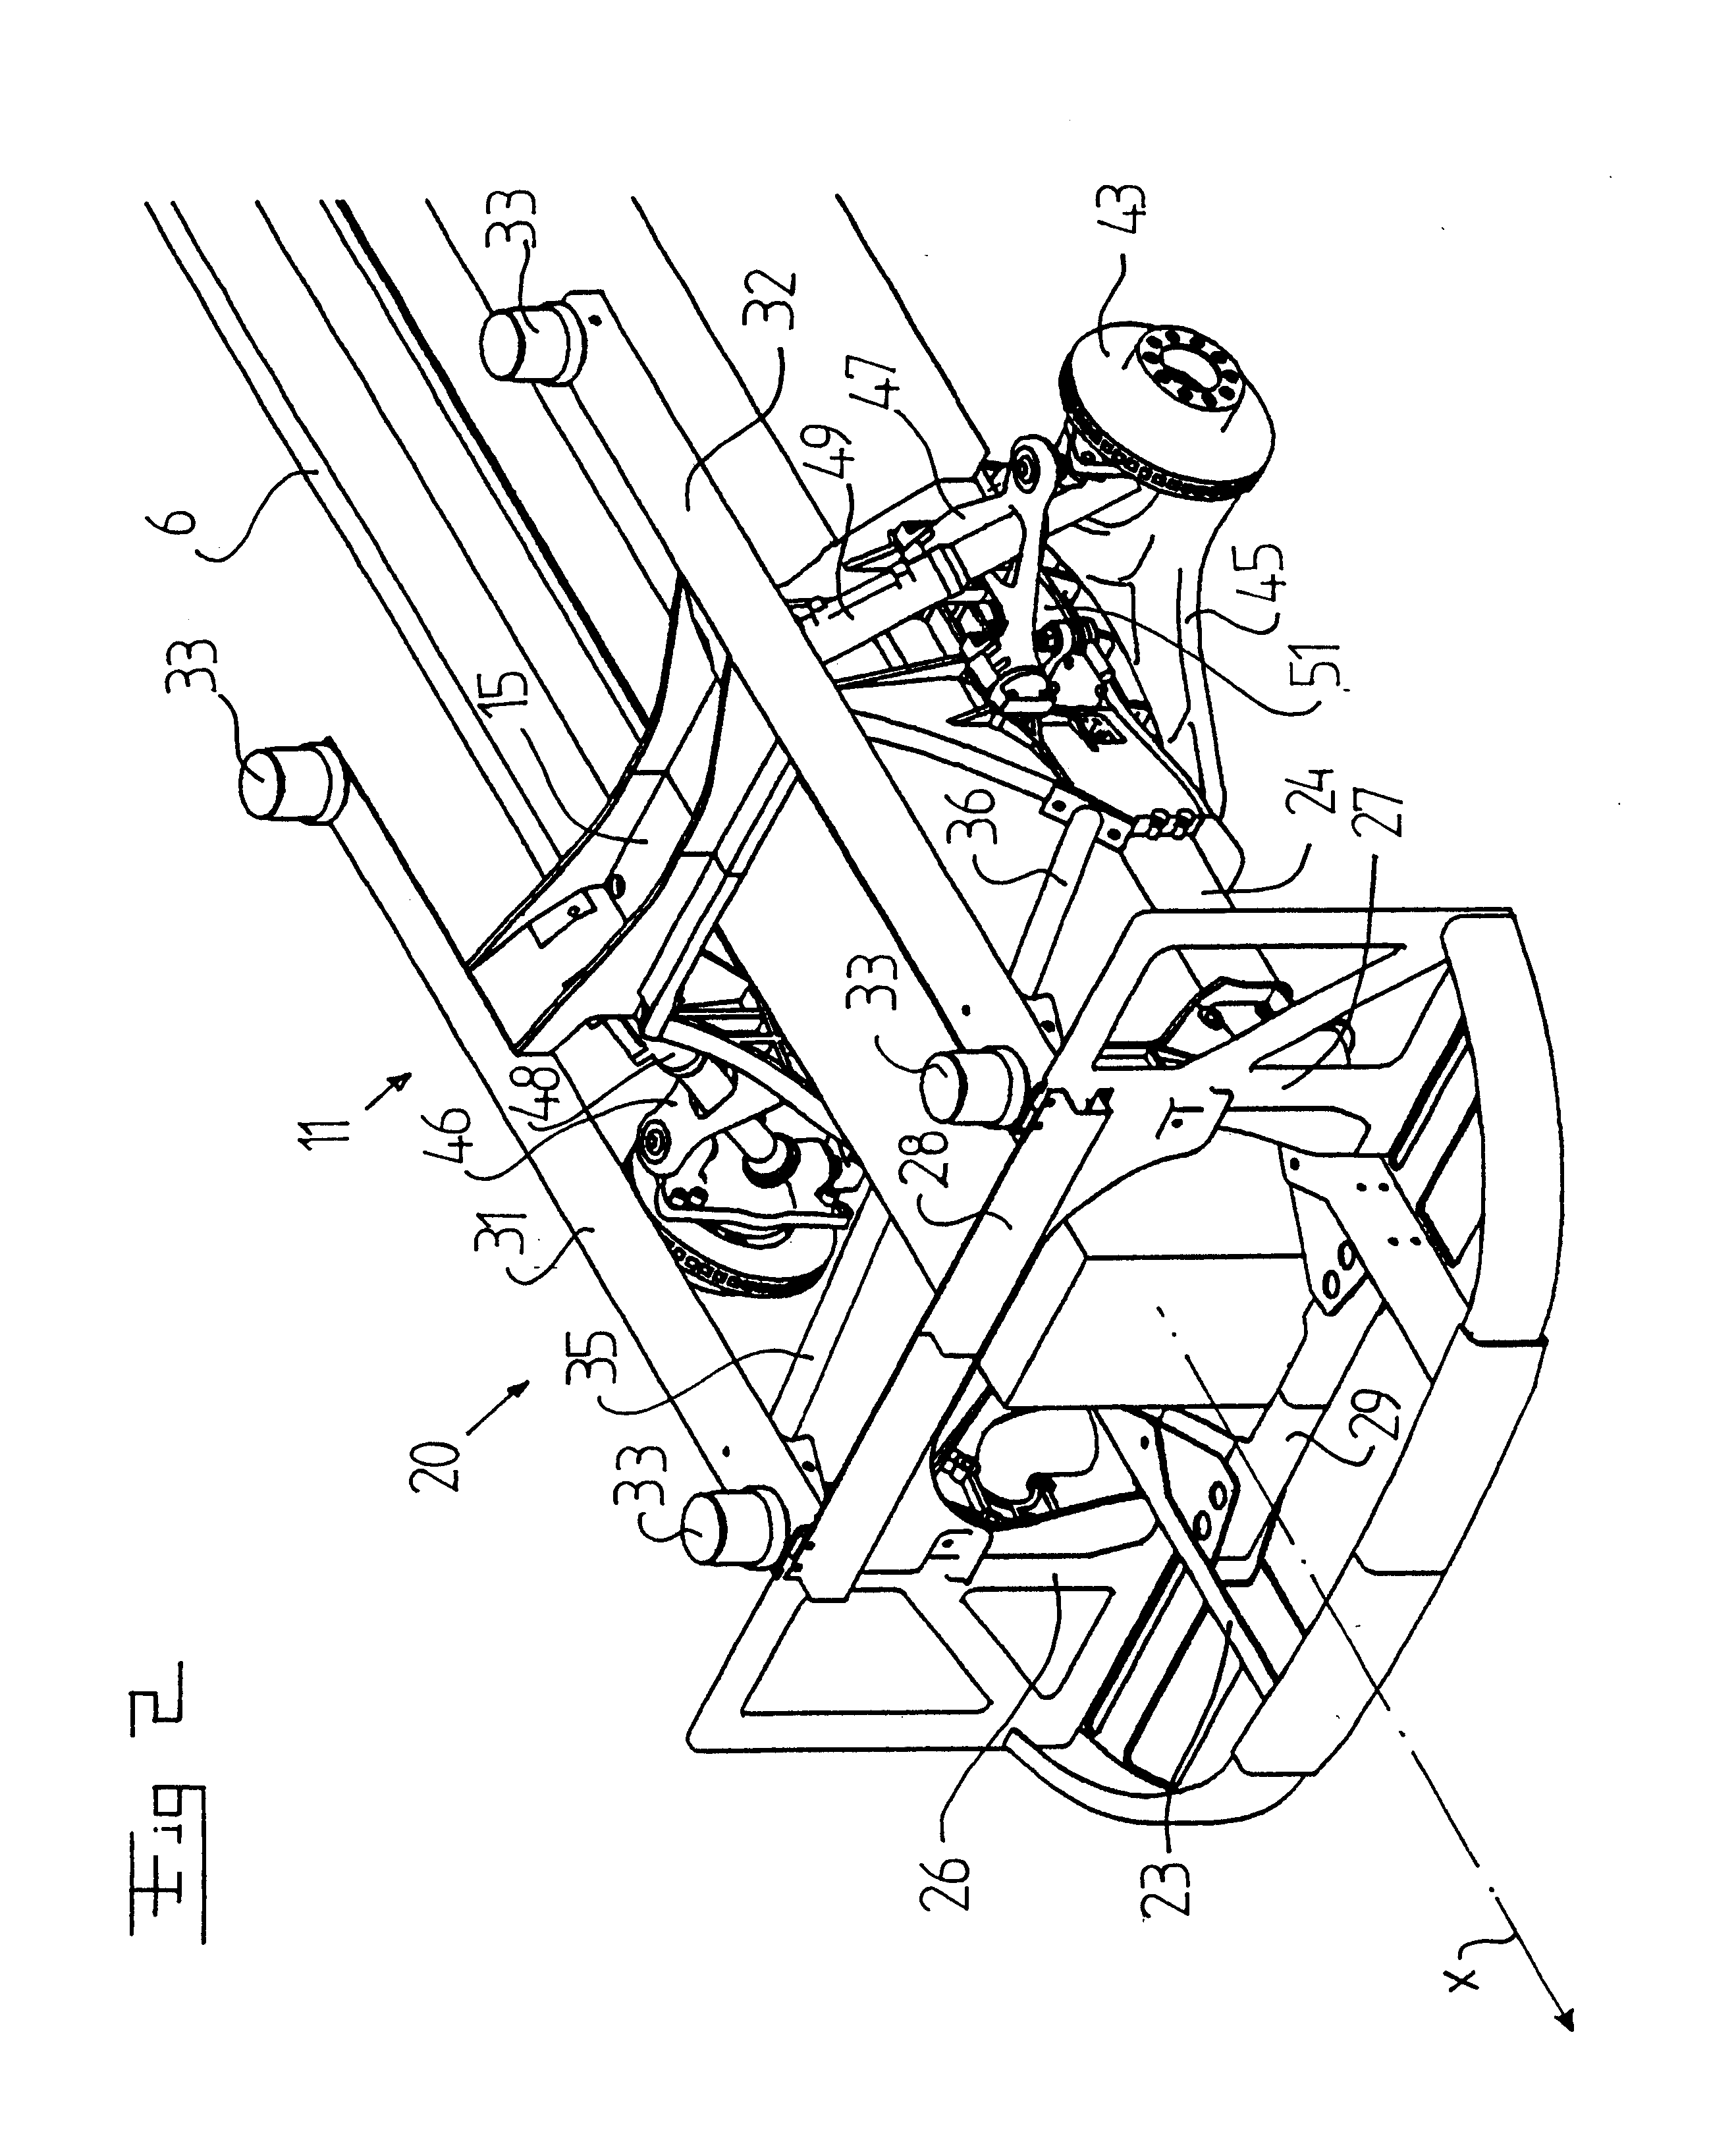 Front axle arrangement for a heavy vehicle